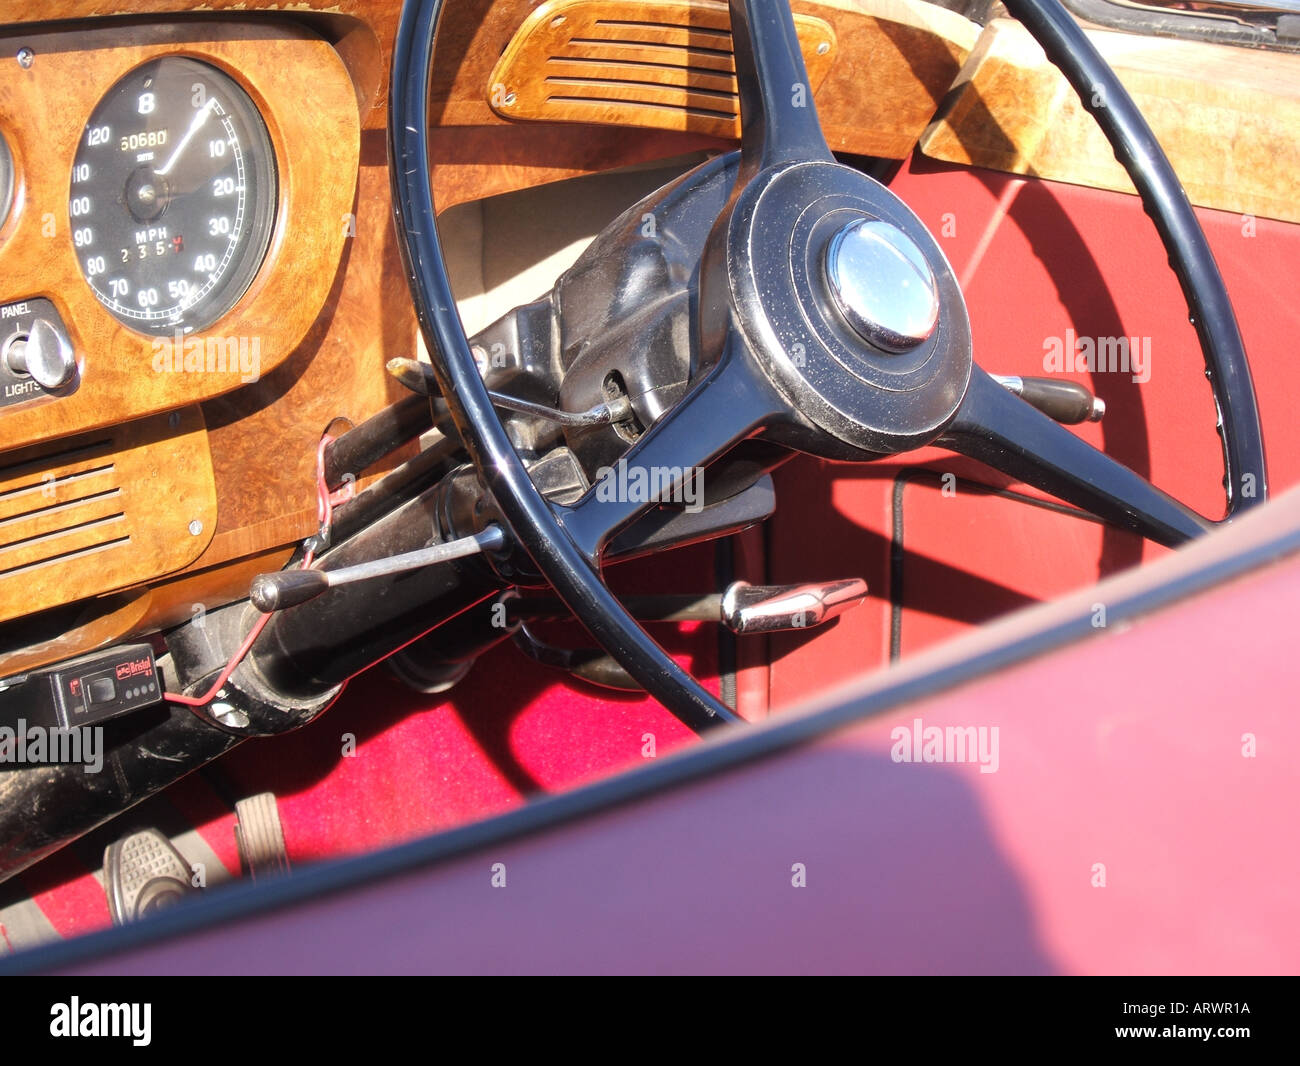 bentley classic car interior Stock Photo